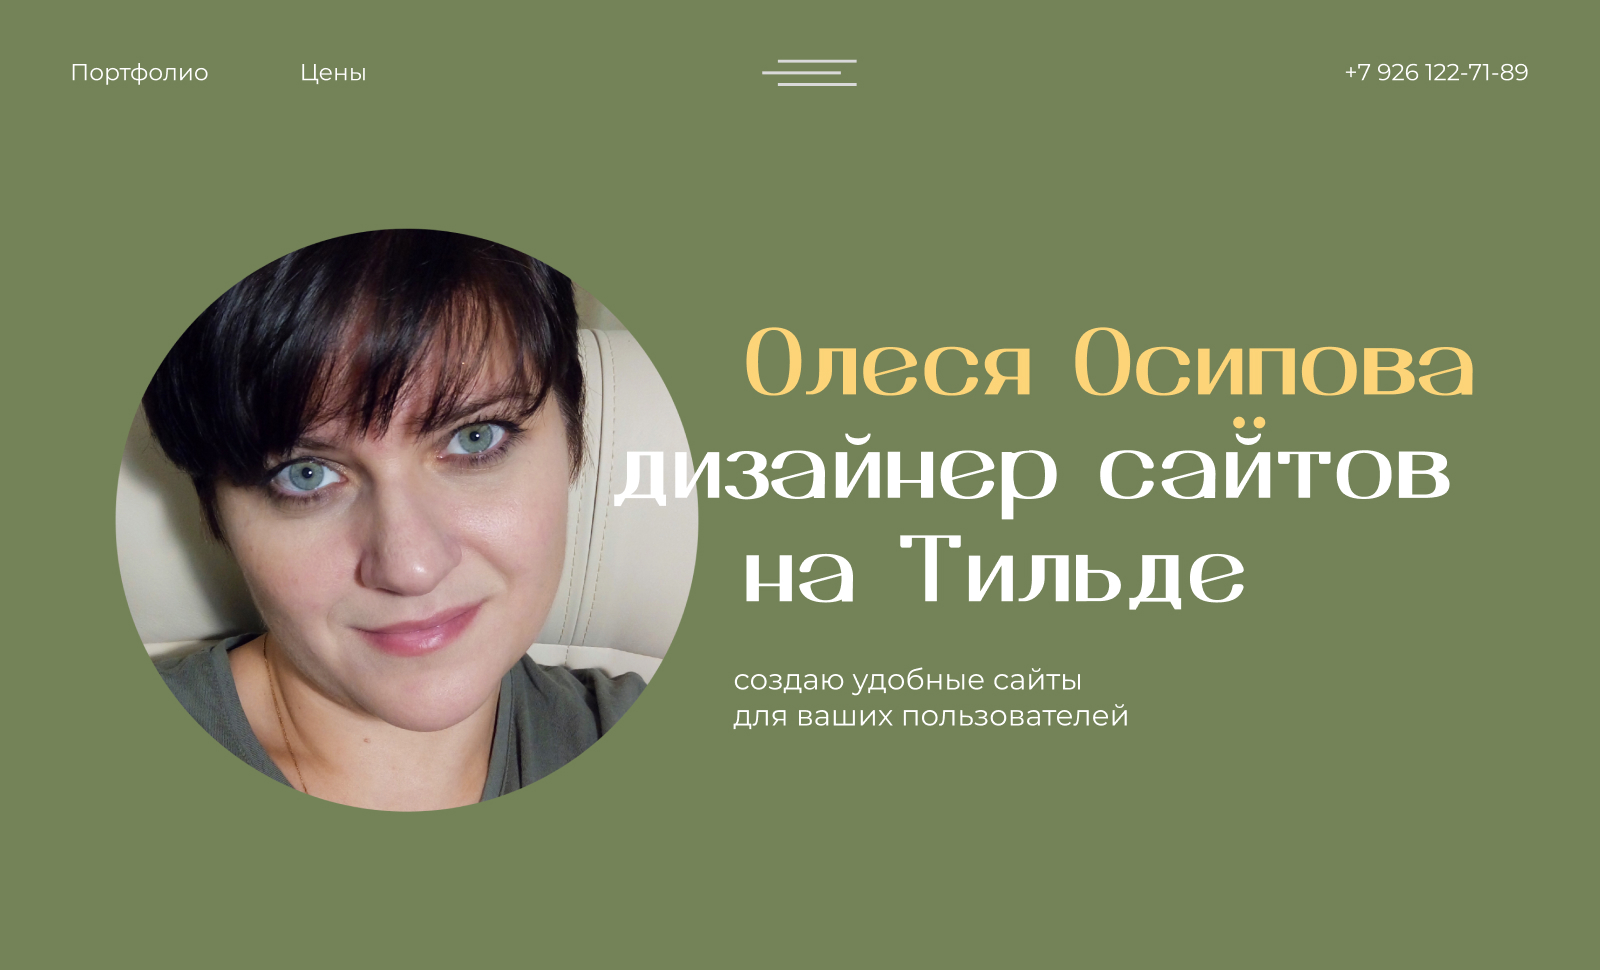 Olessia Osipova Portfolio